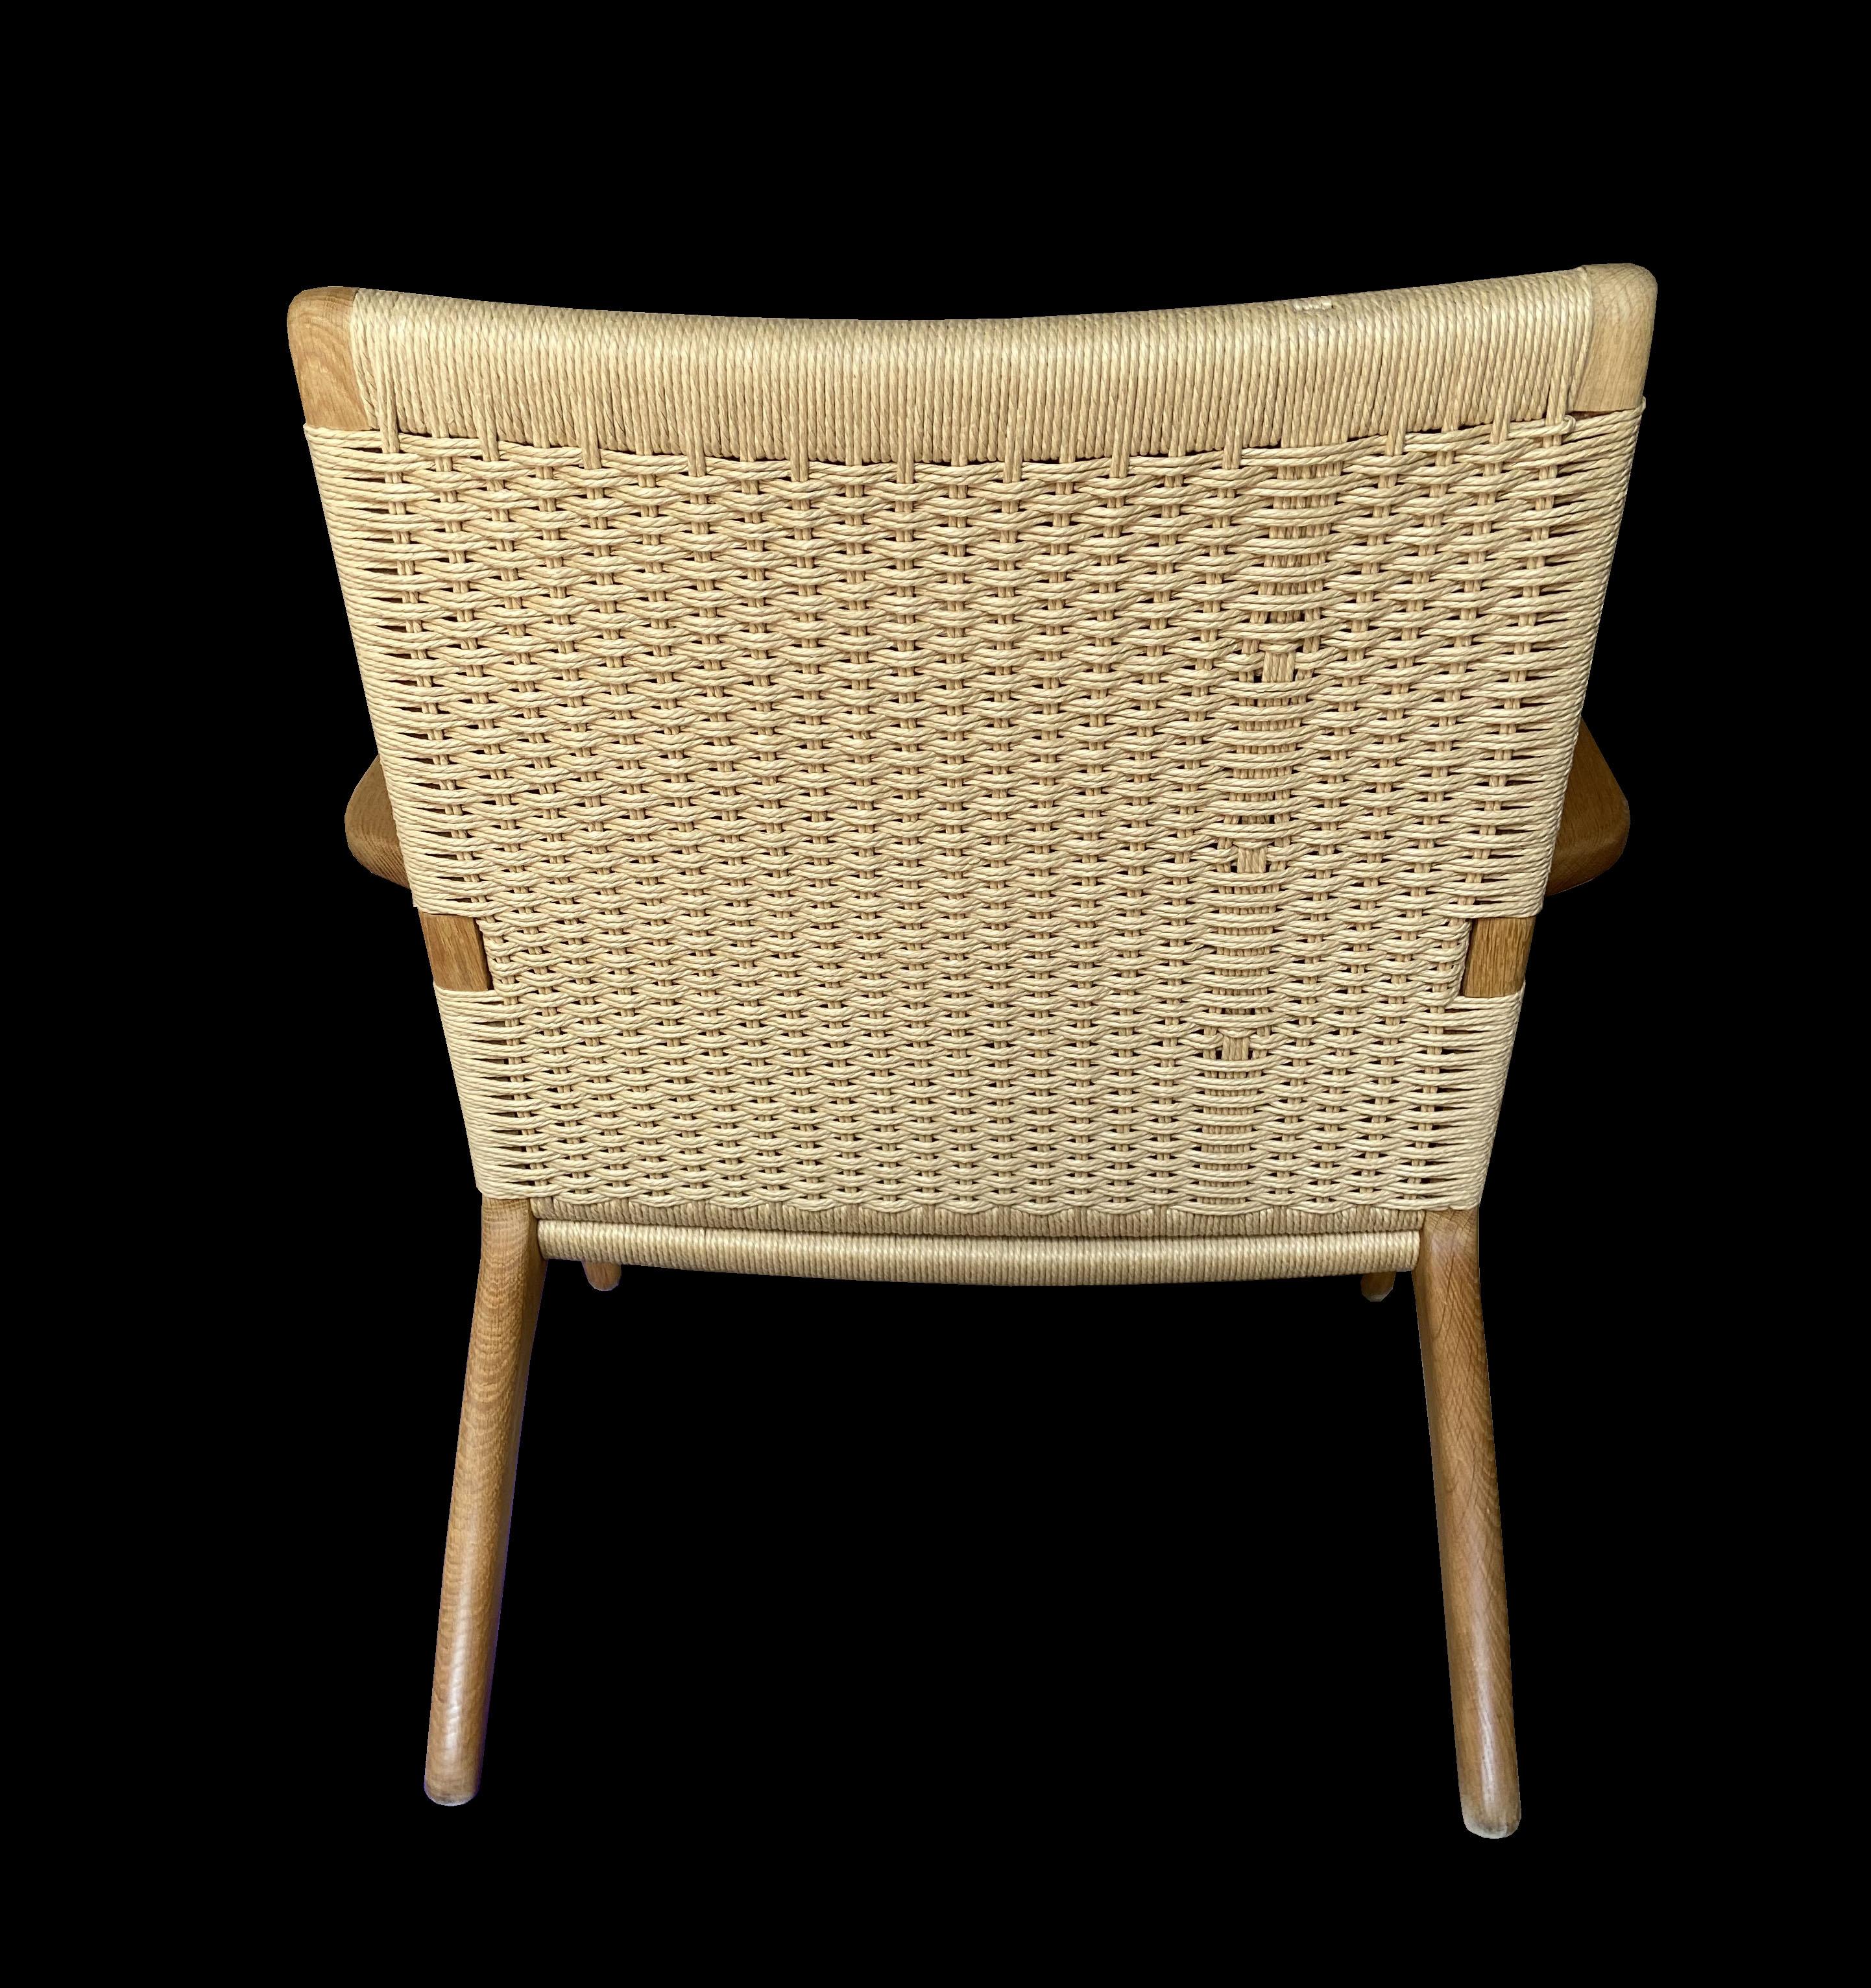 Scandinavian Modern CH25 Chair by Hans J Wegner for Carl Hansen & Son in Oak and Papercord